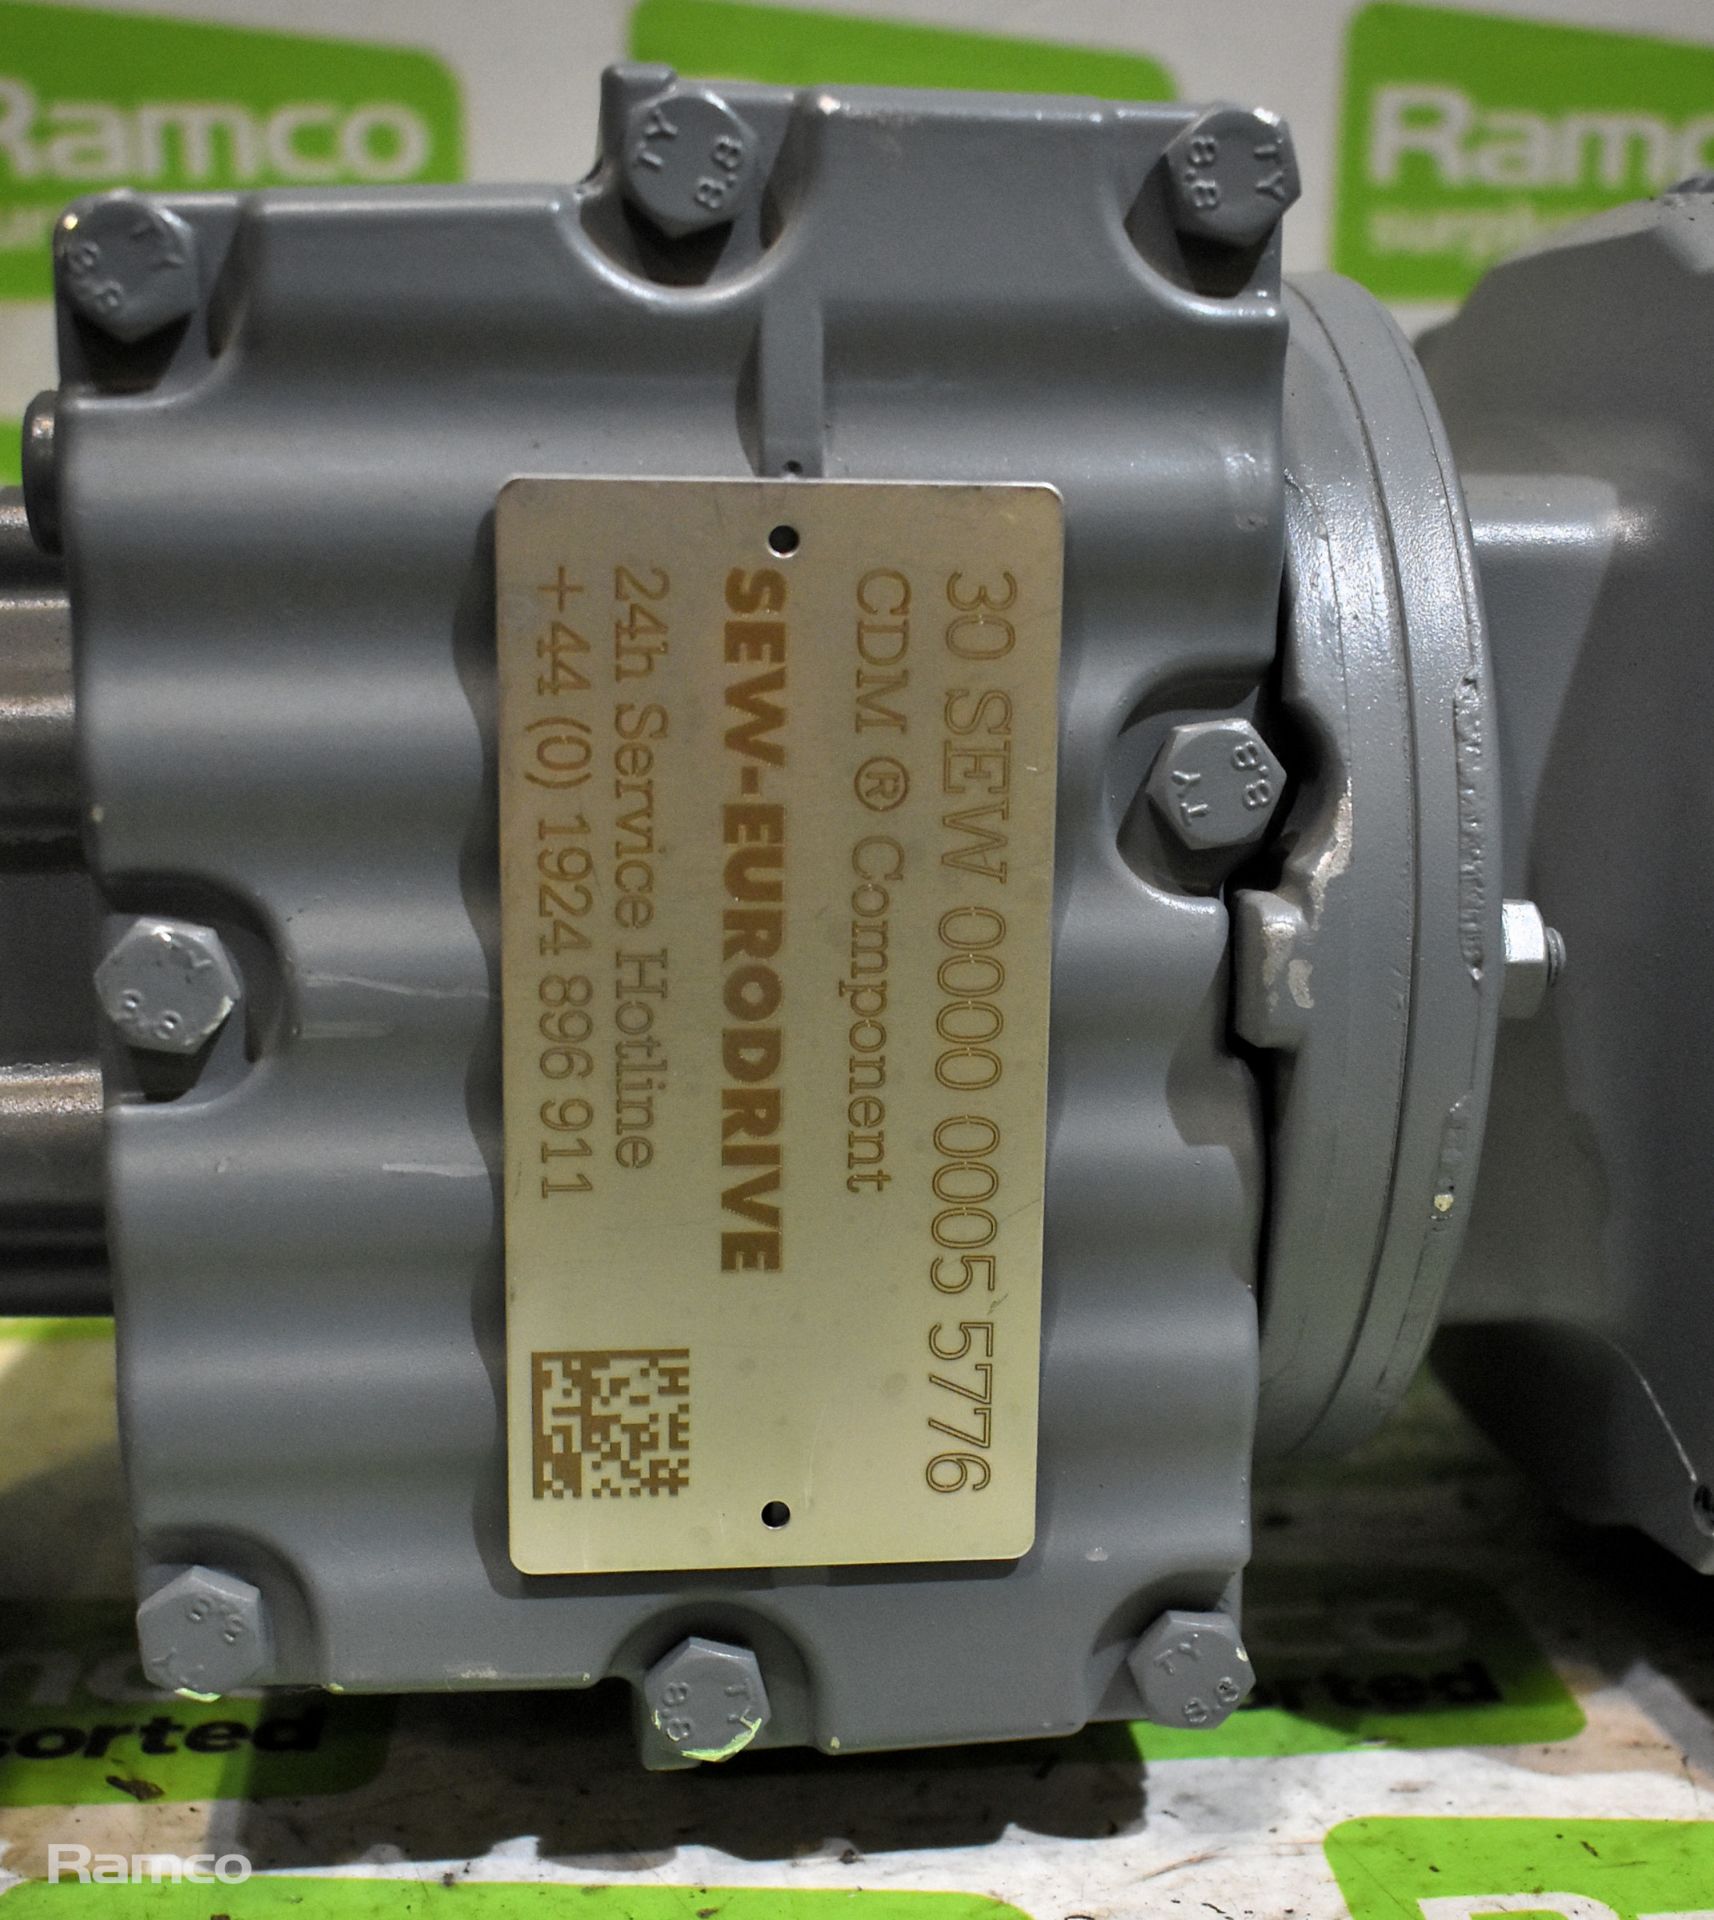 SEW-Eurodrive - RF27 DRE80M4 - gear electric motor - 1435/59 rpm - 0.75kW - 220-242/380-420V - Image 3 of 5